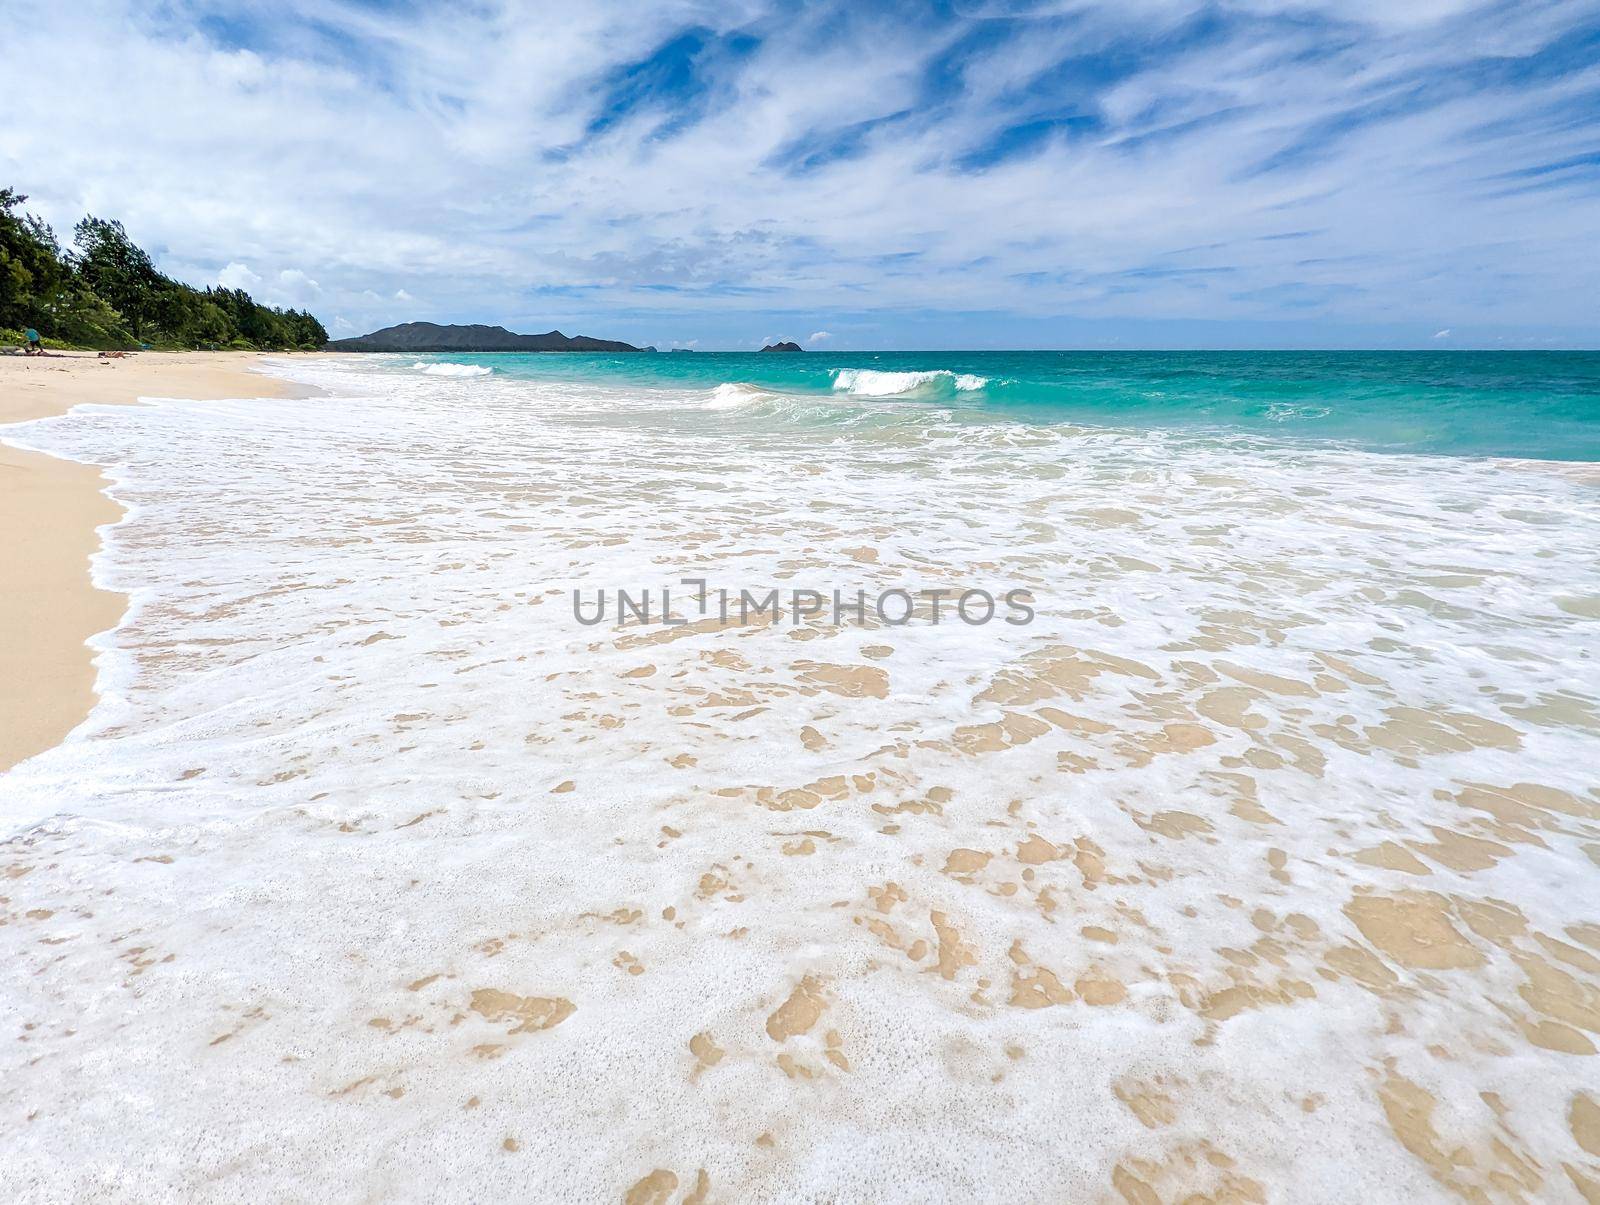 waimanalo beach scenes in oahu hawaii by digidreamgrafix